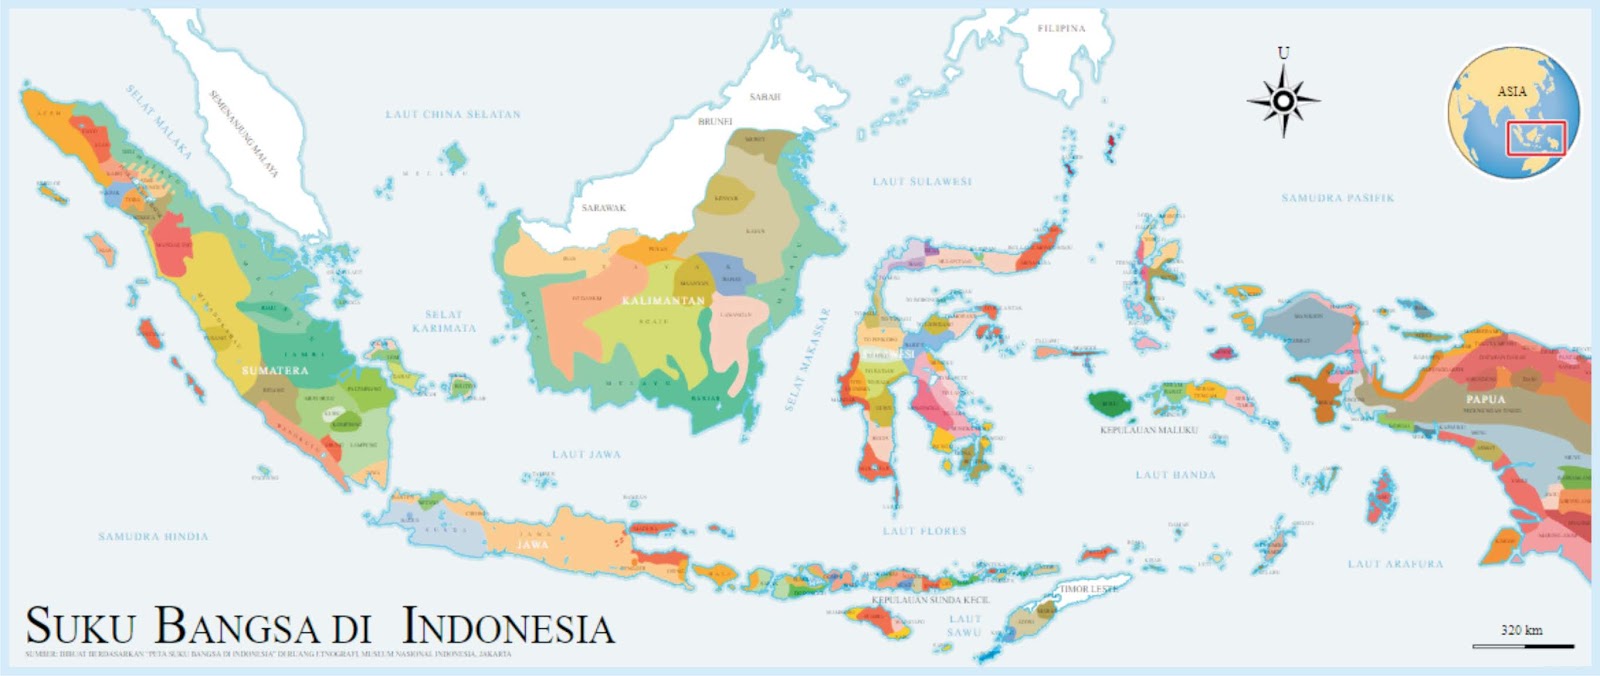 Suku Bangsa di Indonesia - Kelas V SD/MI Tema 1 Sub Tema 2 Pembelajaran 3